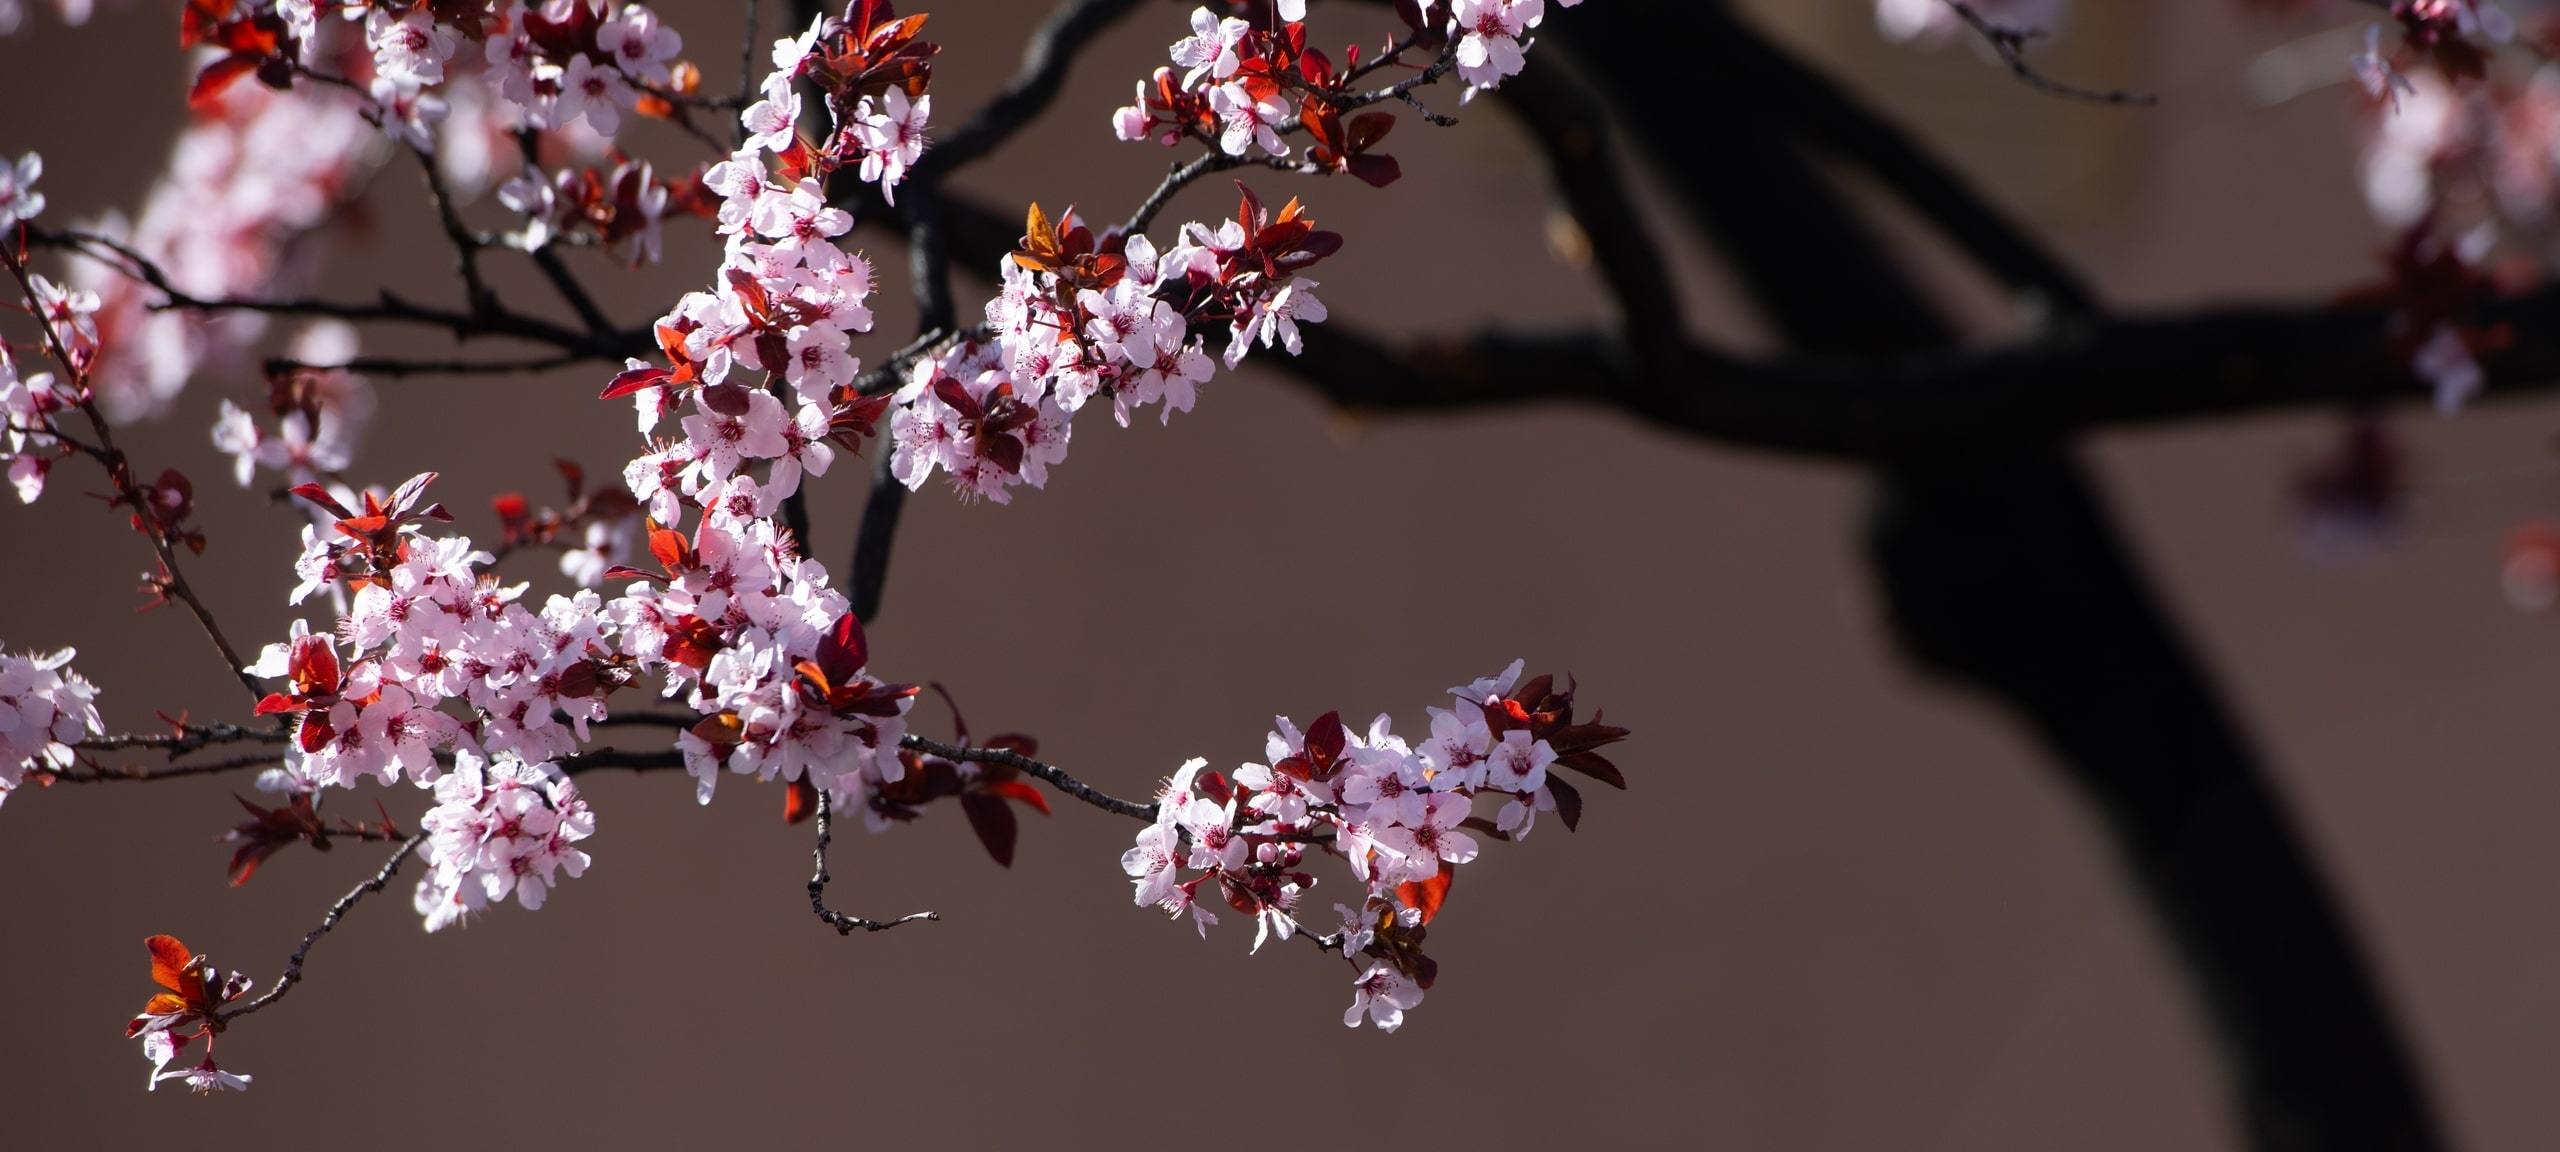 Cherry blossoms against Adobe house, Santa Fe